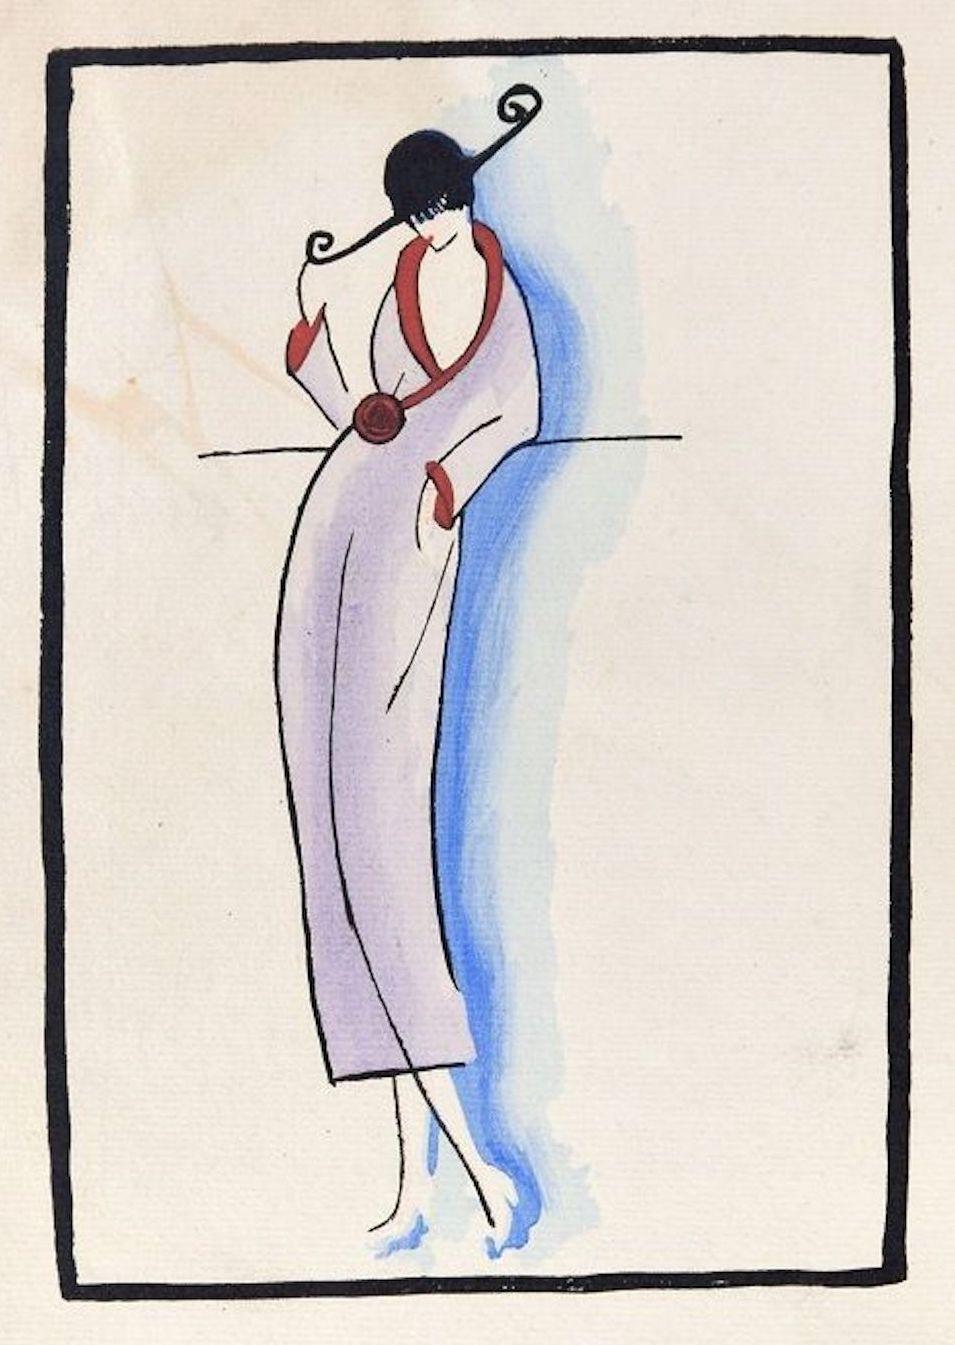 Unknown Figurative Print – Modeable Woman / Holzschnitt, handkoloriert in Tempera auf Papier – Art déco – 1920er Jahre